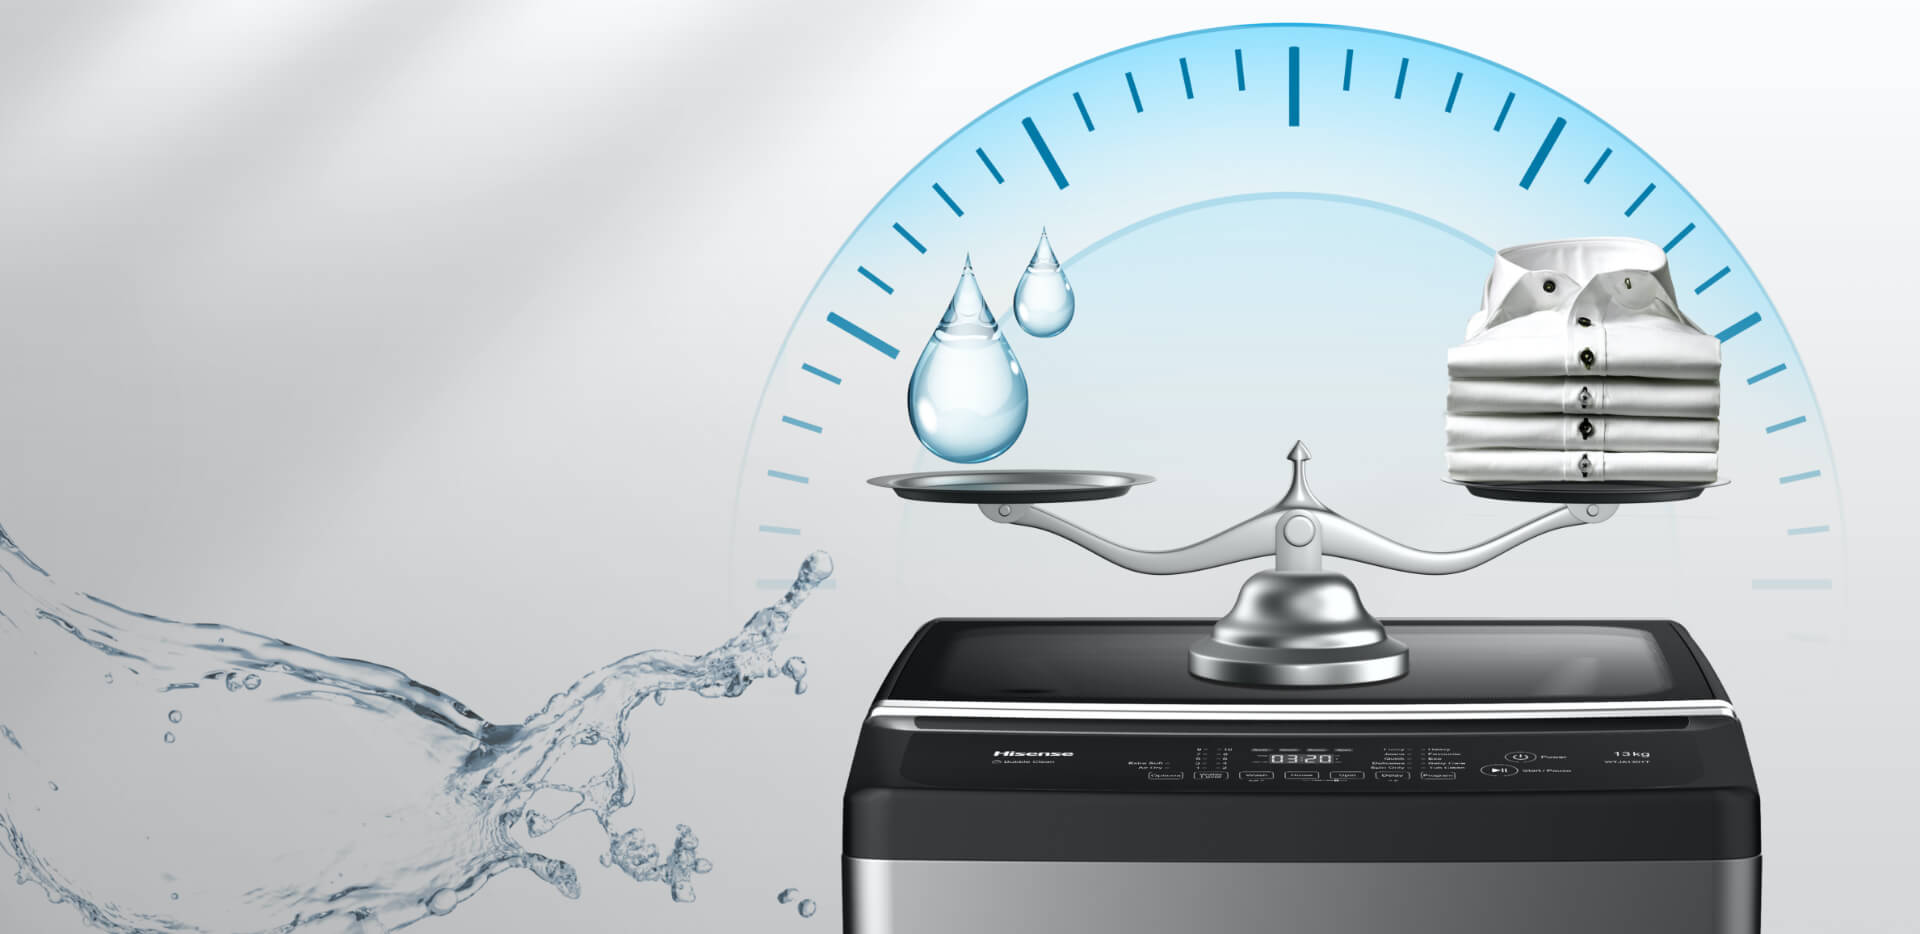 Hisense 8KG Washing Machine WTCT802 extra soft touch design